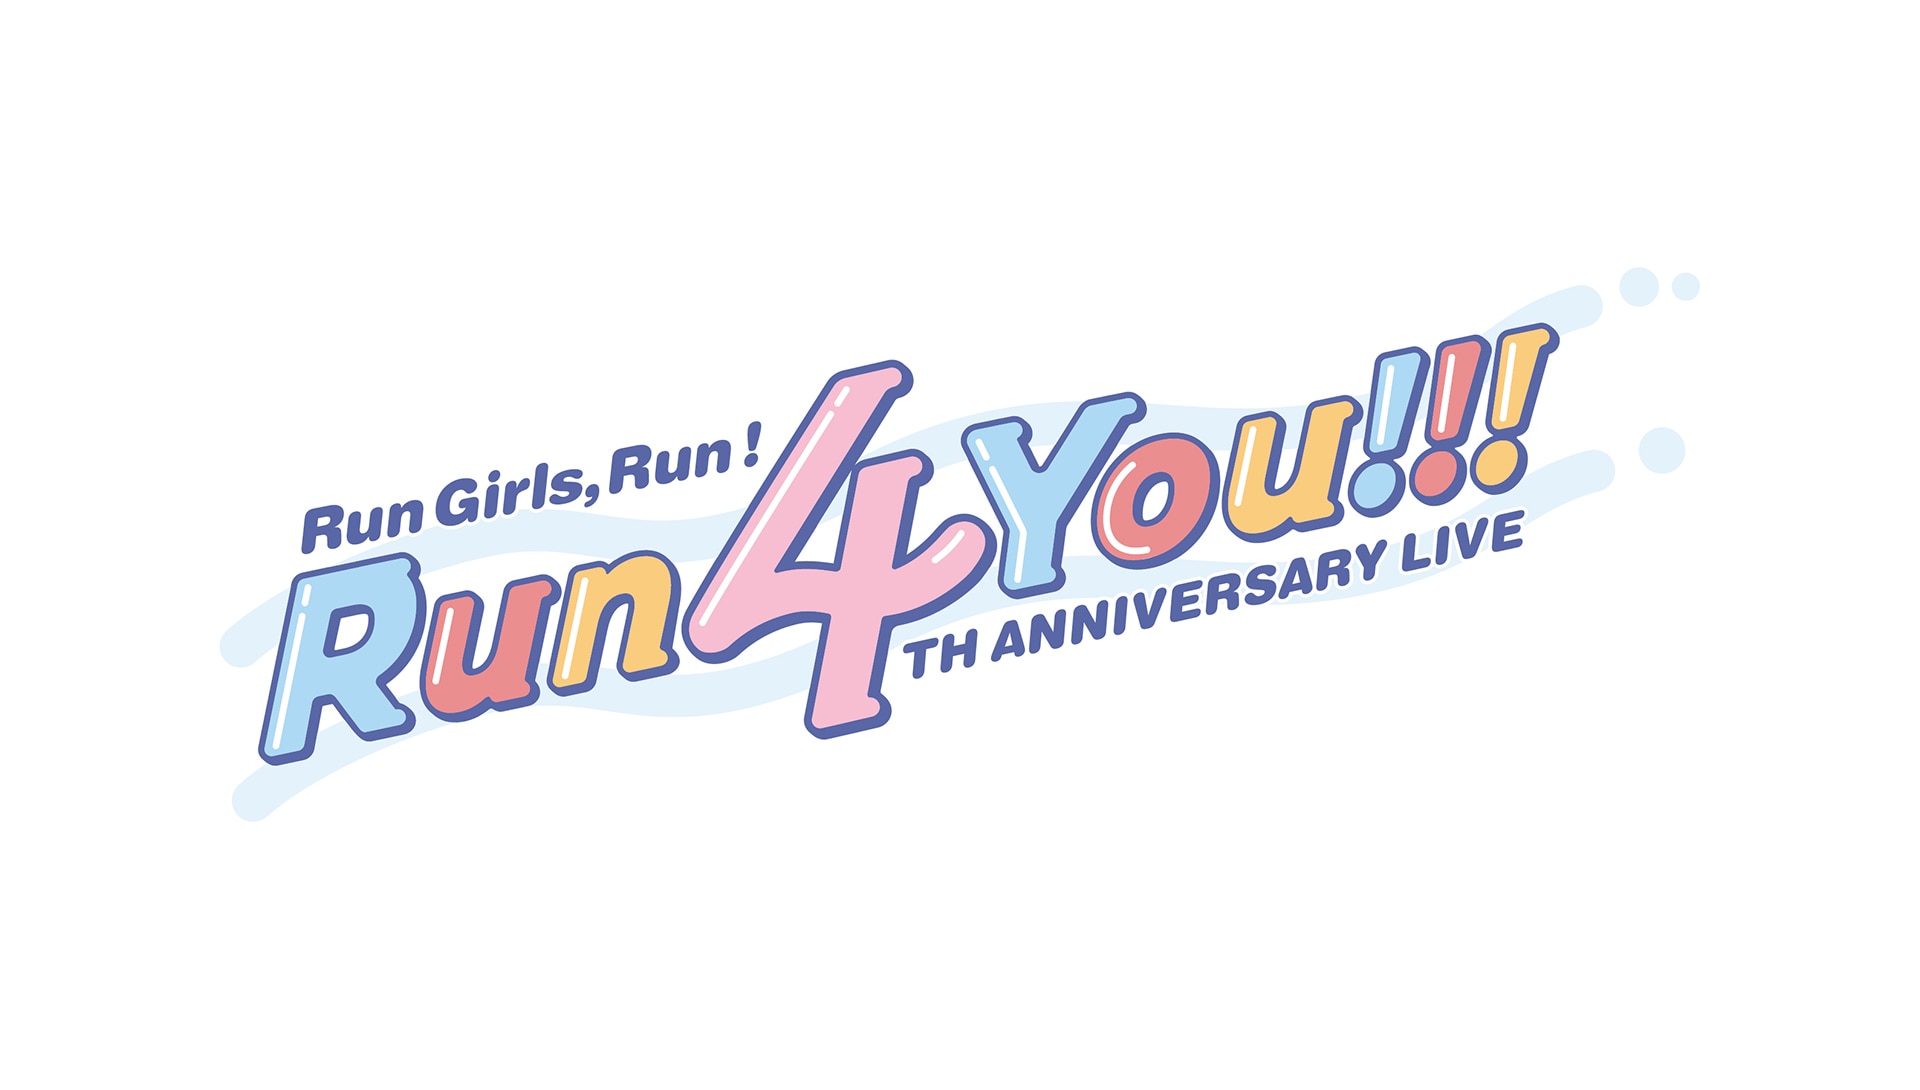 「Run Girls, Run！4th Anniversary LIVE Run 4 You!!!」オフィシャル2次先行のご案内